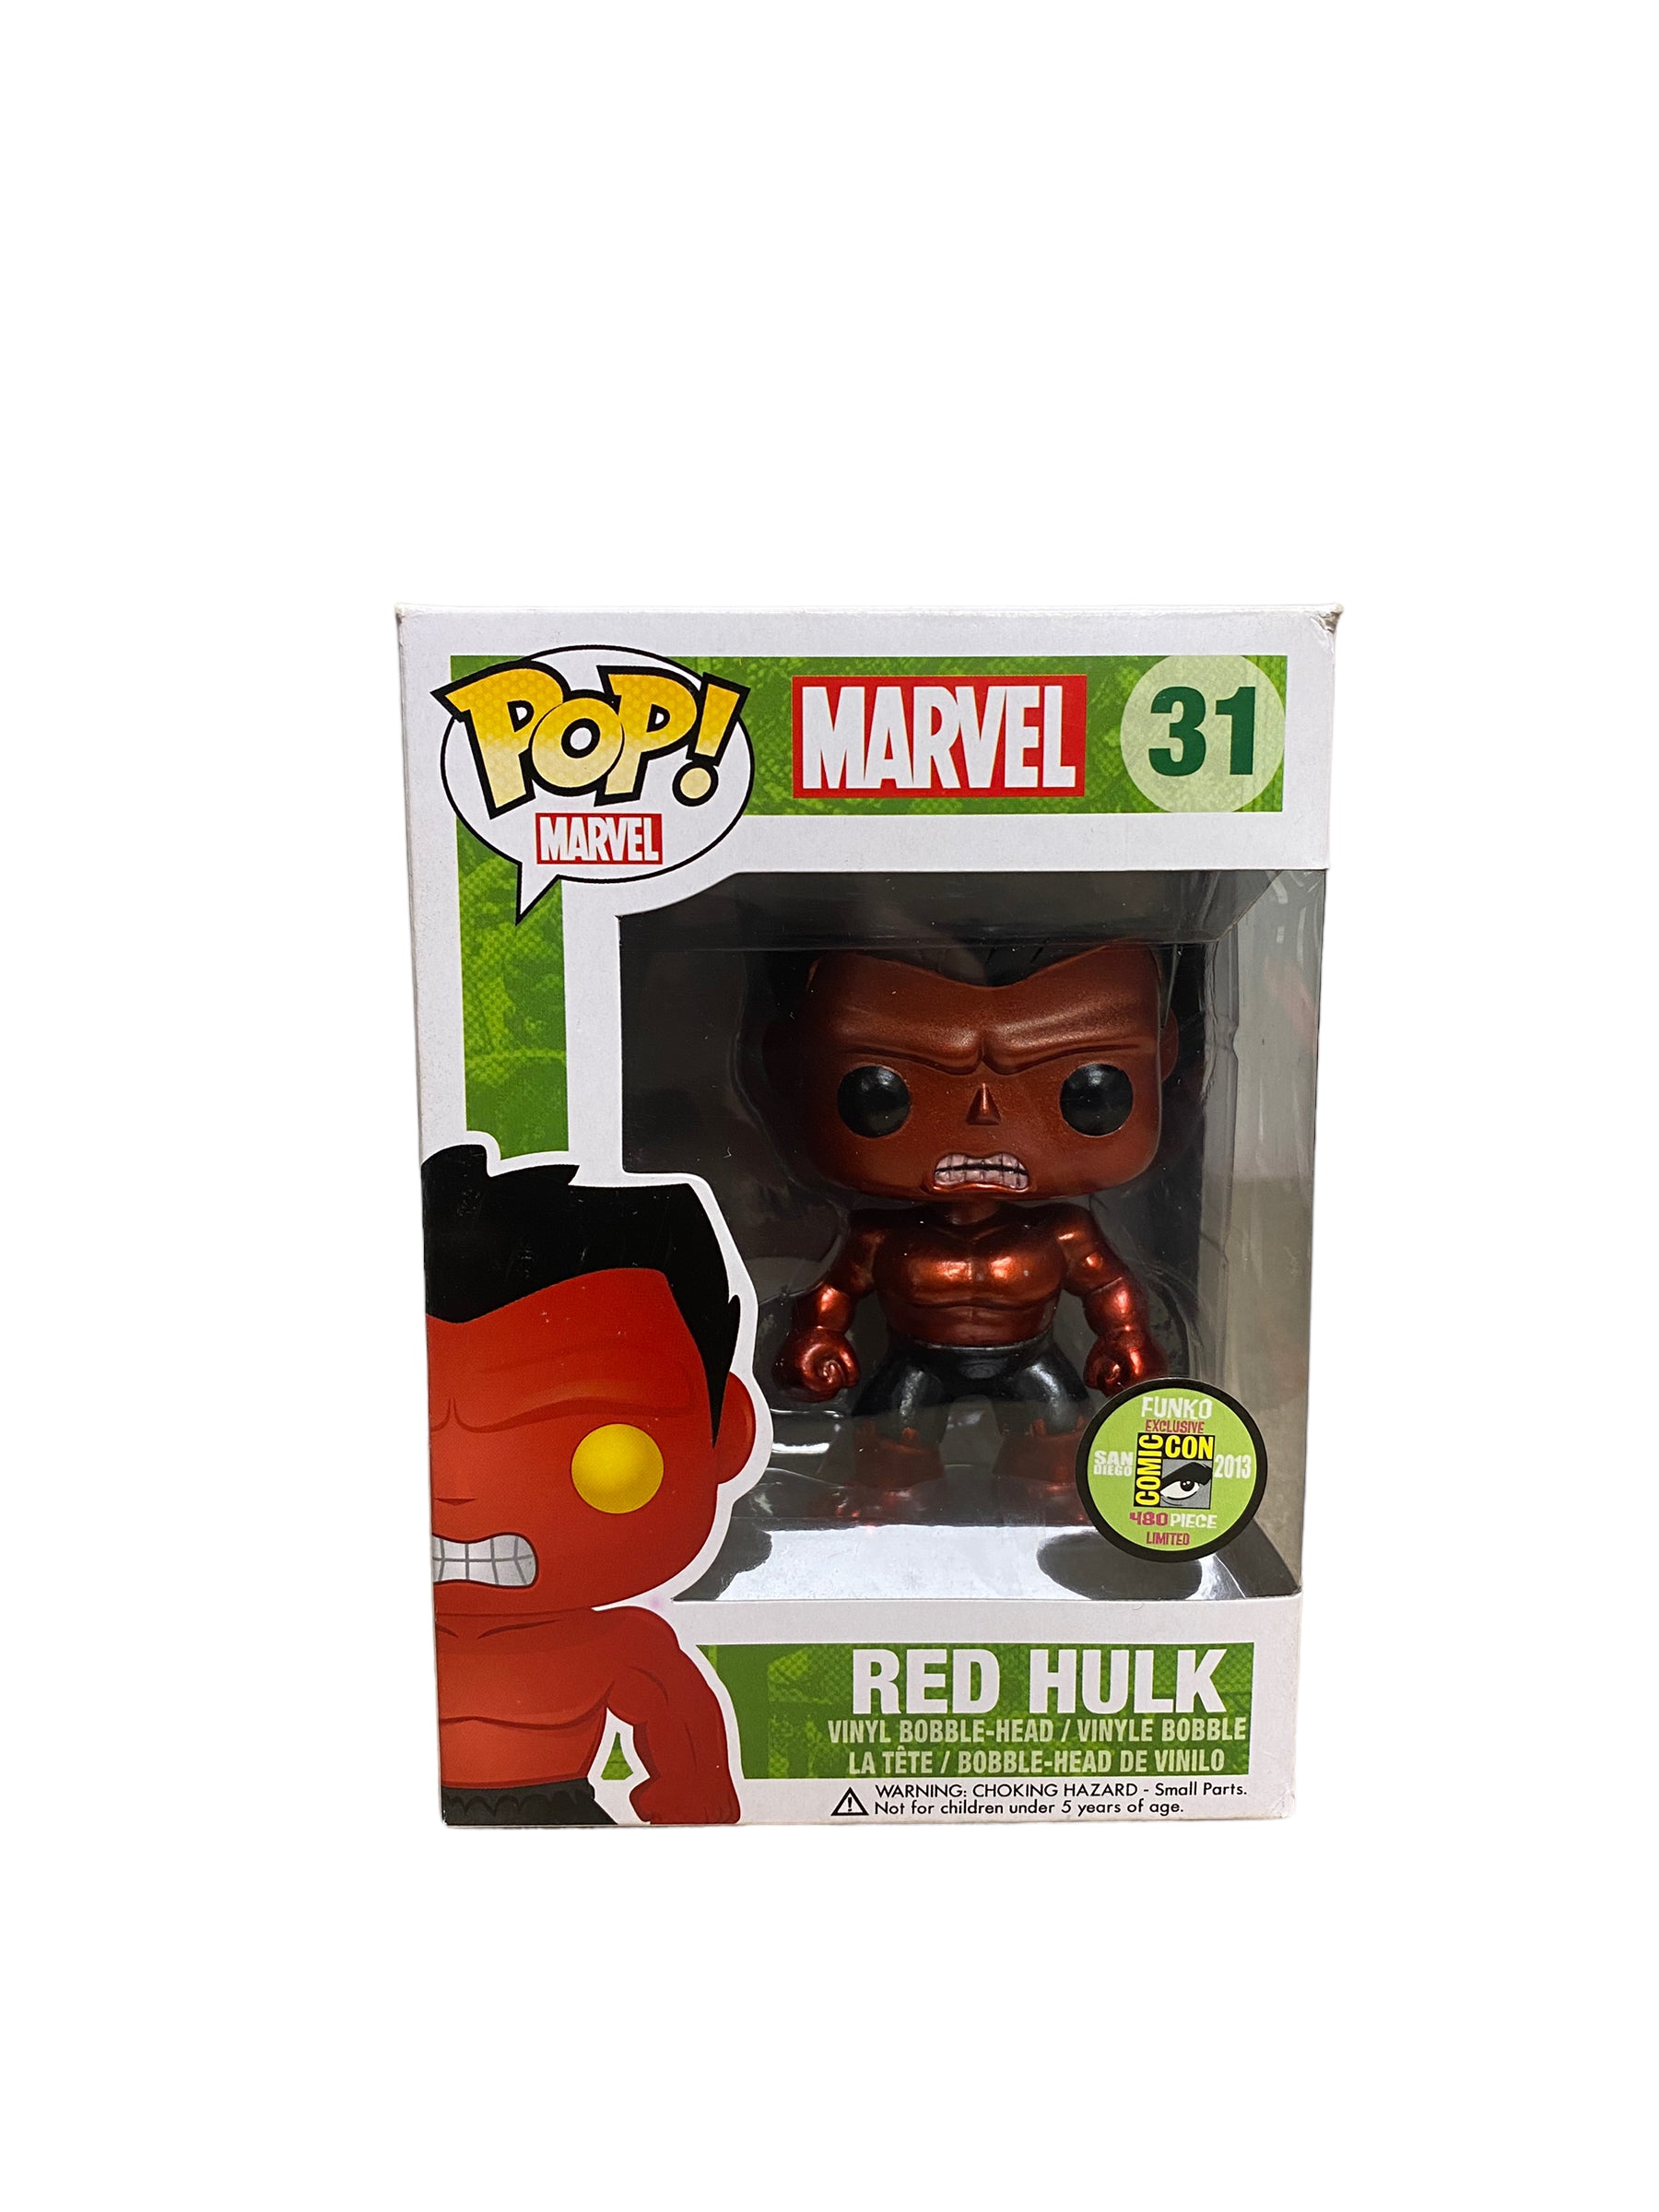 Red Hulk #31 (Metallic) Funko Pop! - Marvel - SDCC 2013 Exclusive LE480 Pcs - Condition 8/10